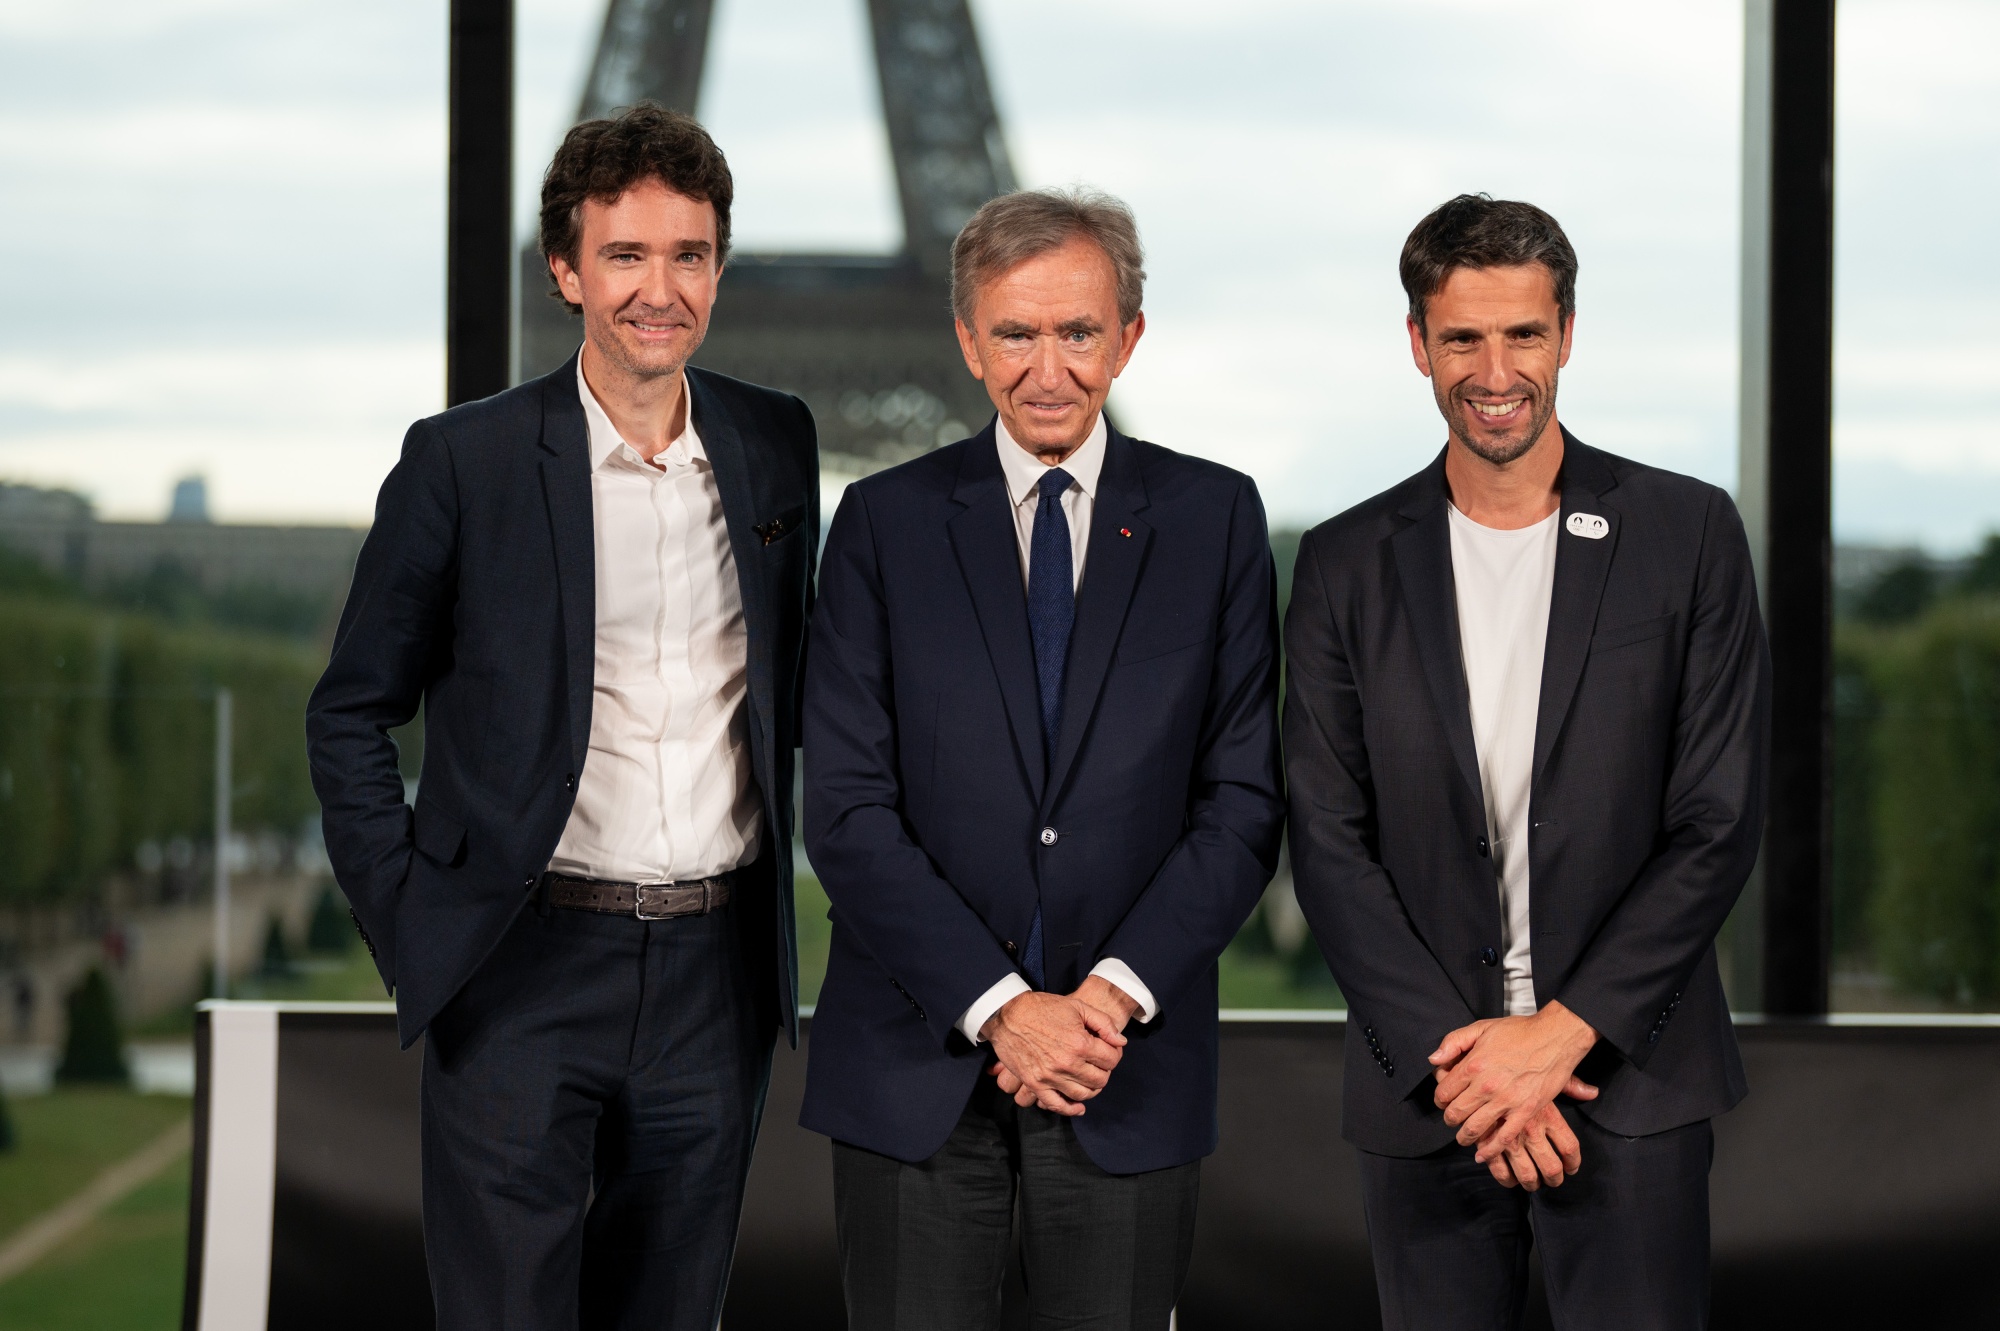 Paris 2024 Partners with Moët Hennessy Louis Vuitton – SportsTravel